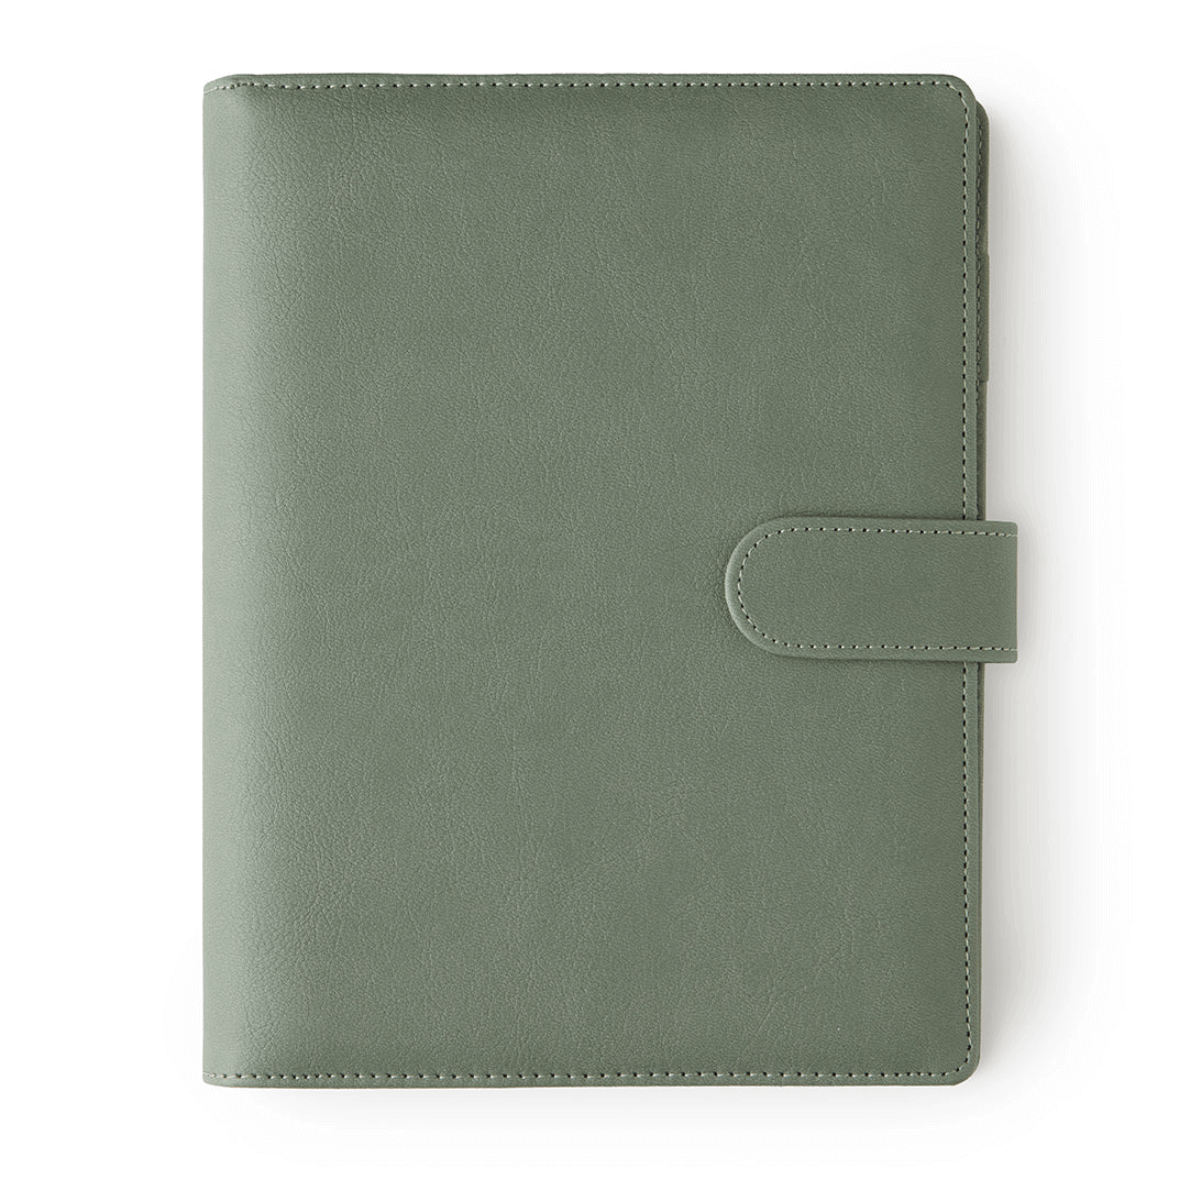 Daily Goal Setter - Agenda cover sage groen - My Lovely Notebook